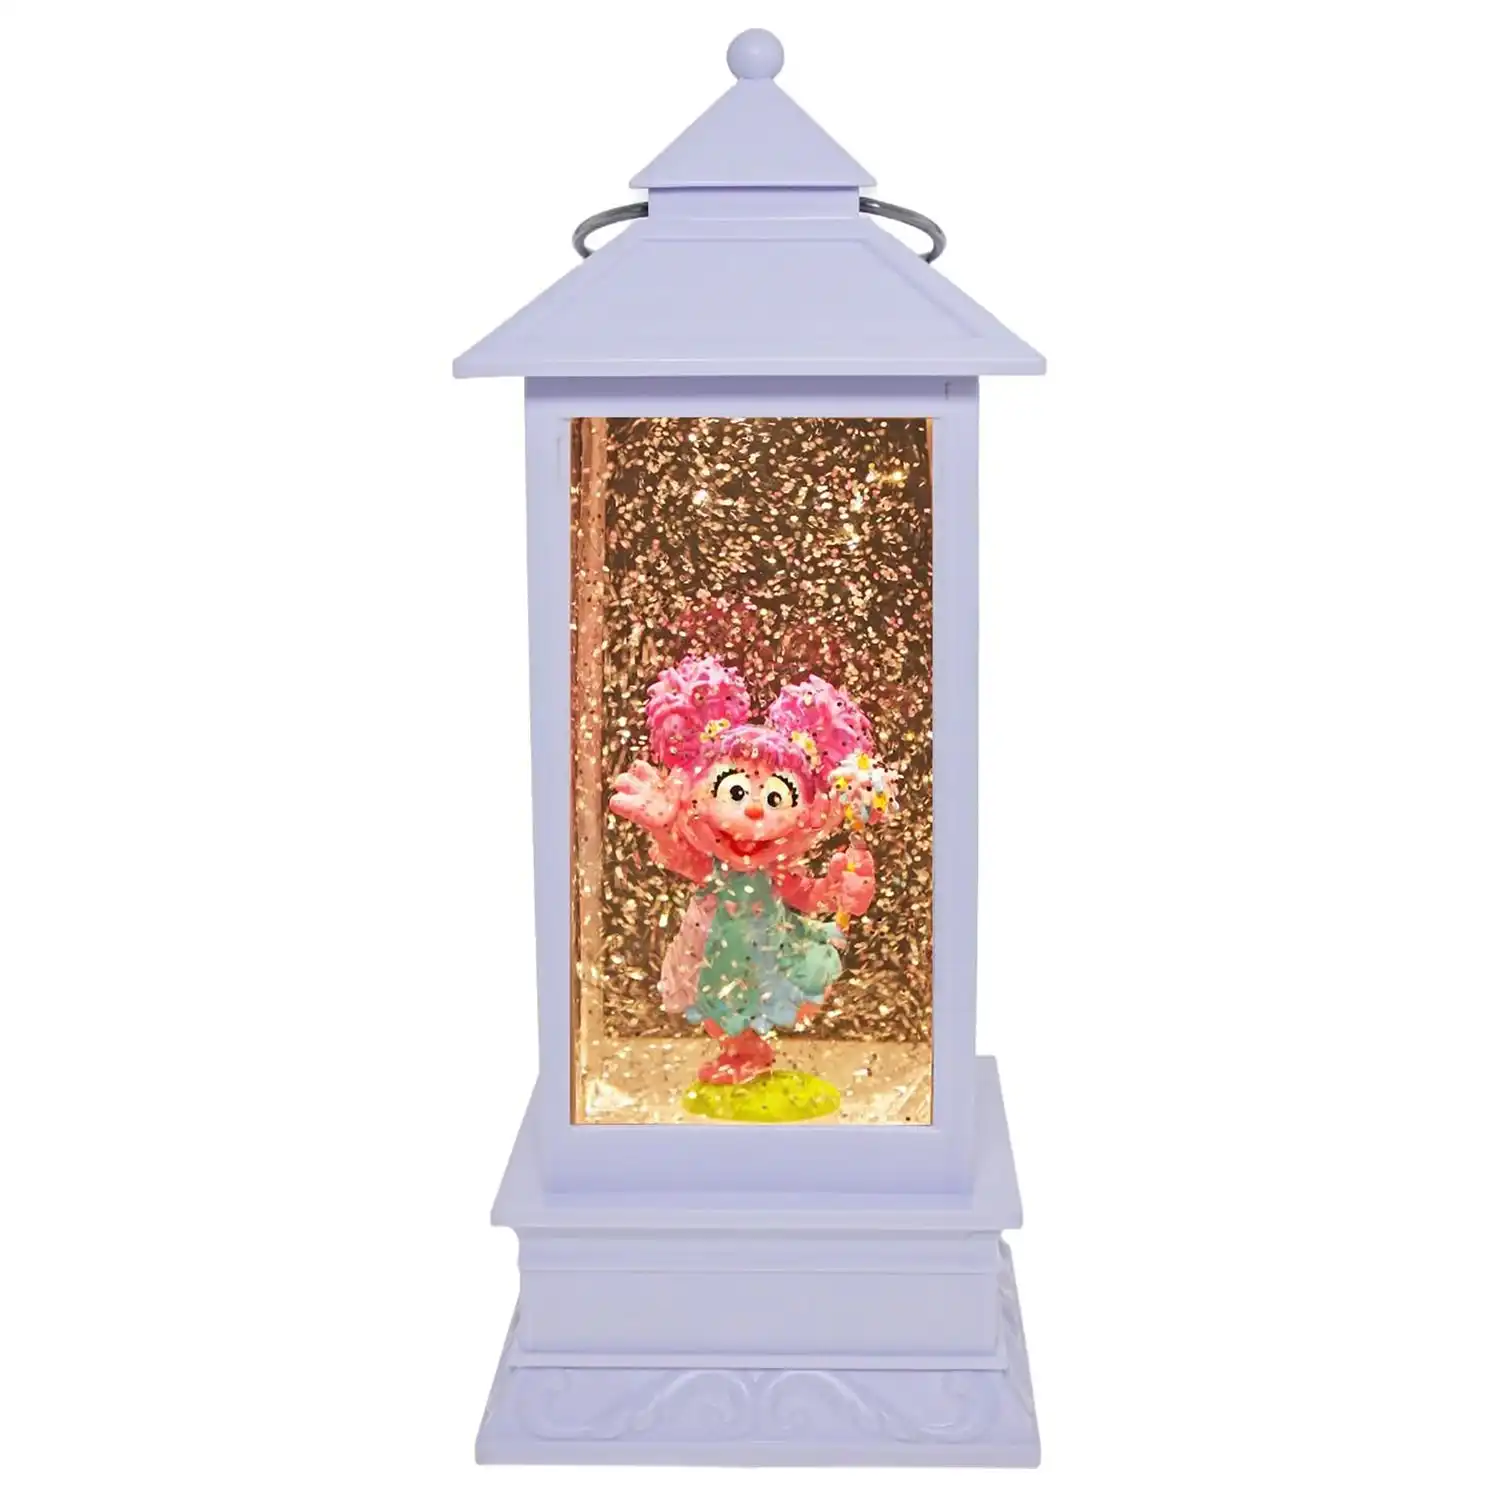 Sesame Street - Abbi Cadabby Lantern